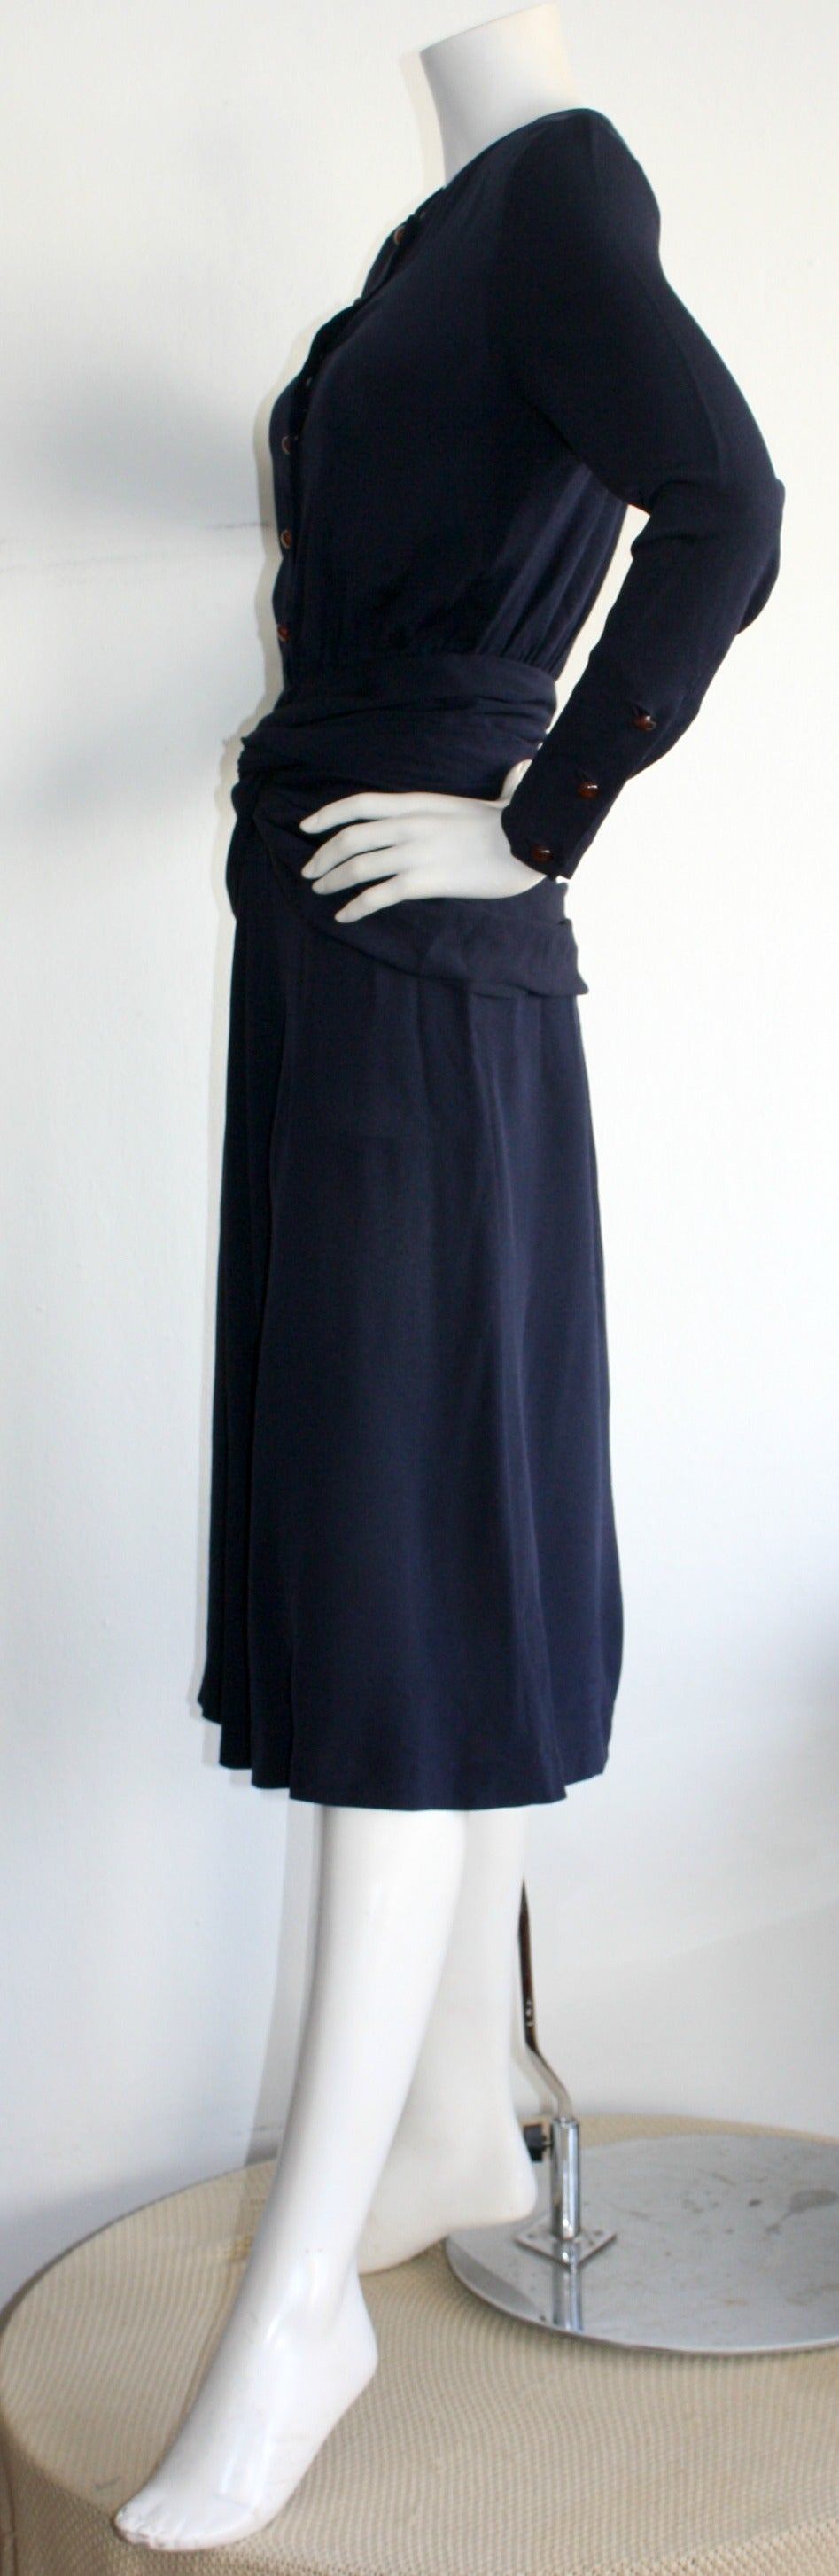 Vintage Chloe by Karl Lagerfeld 1930s Style Navy Blue Dress 1